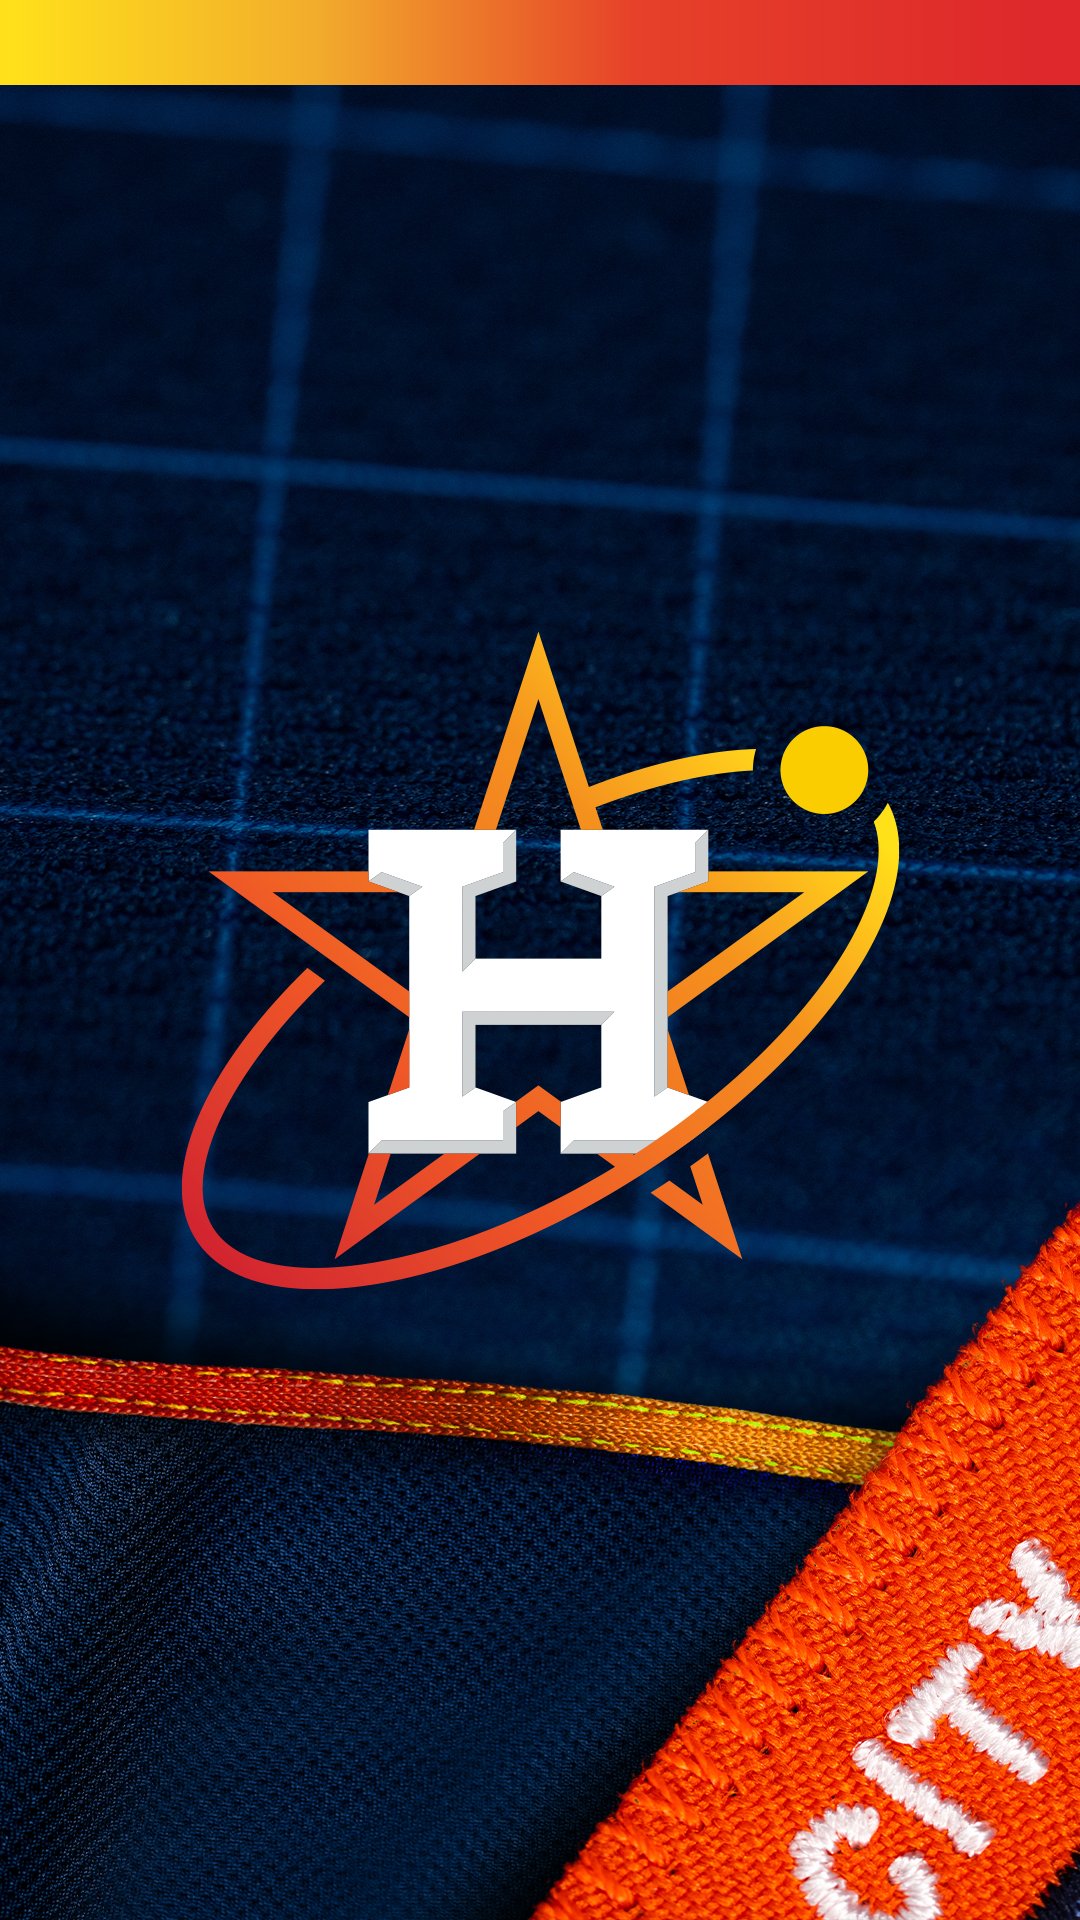 Houston Astros on X Get your lock screen ready for tonight SpaceCity  WallpaperWednesday x ImpactMyBiz httpstcoKVEmtvpmqL  X